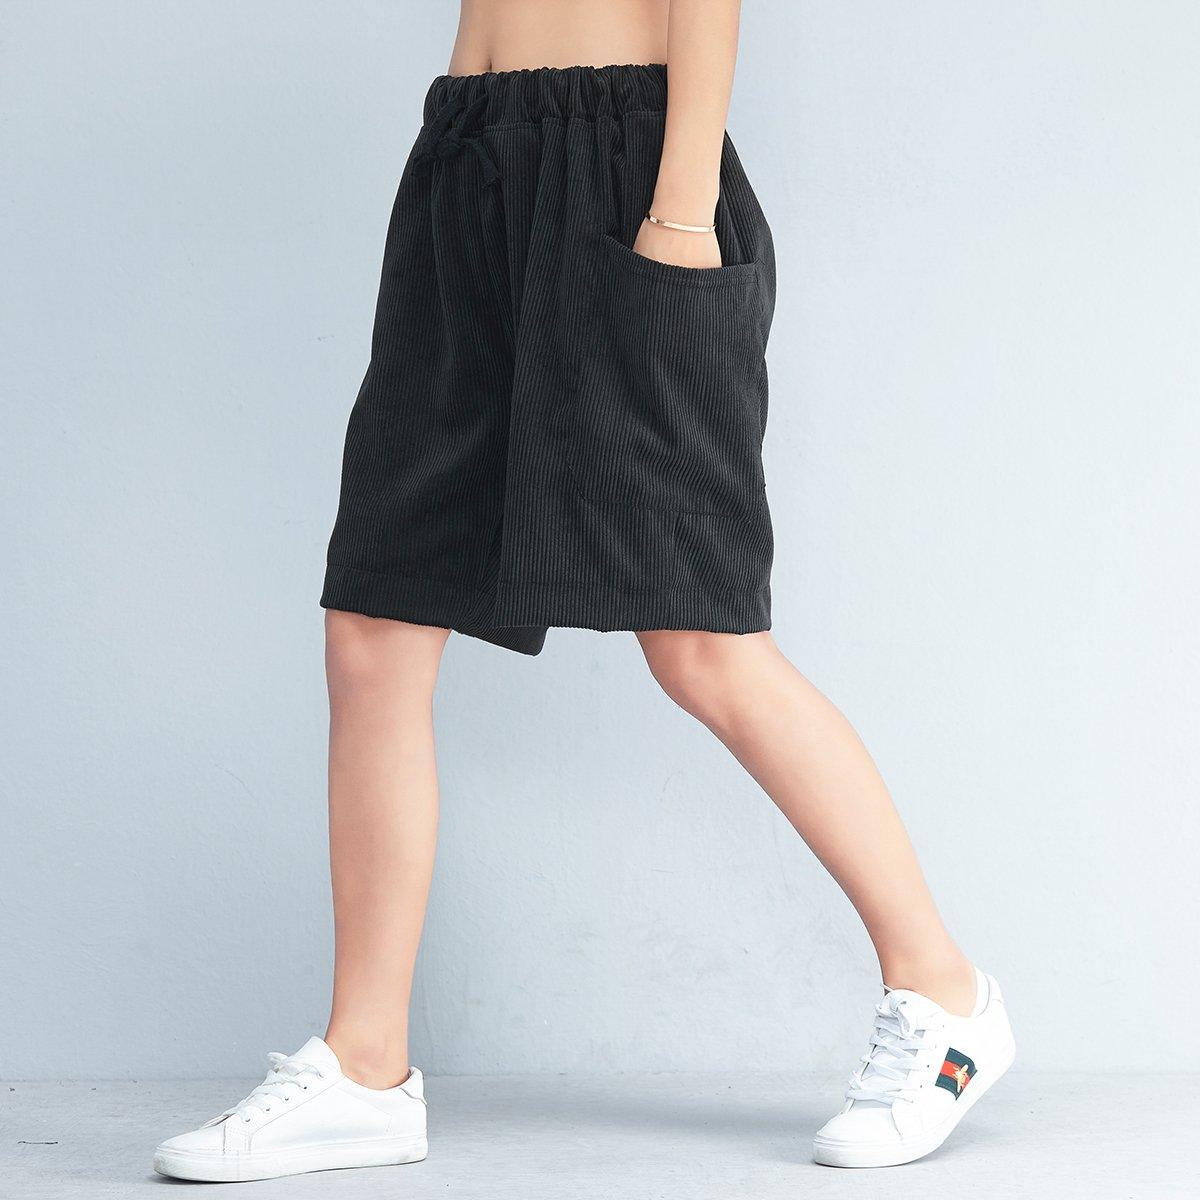 black striped casual cotton pants plus size  elastic waist shorts - Omychic